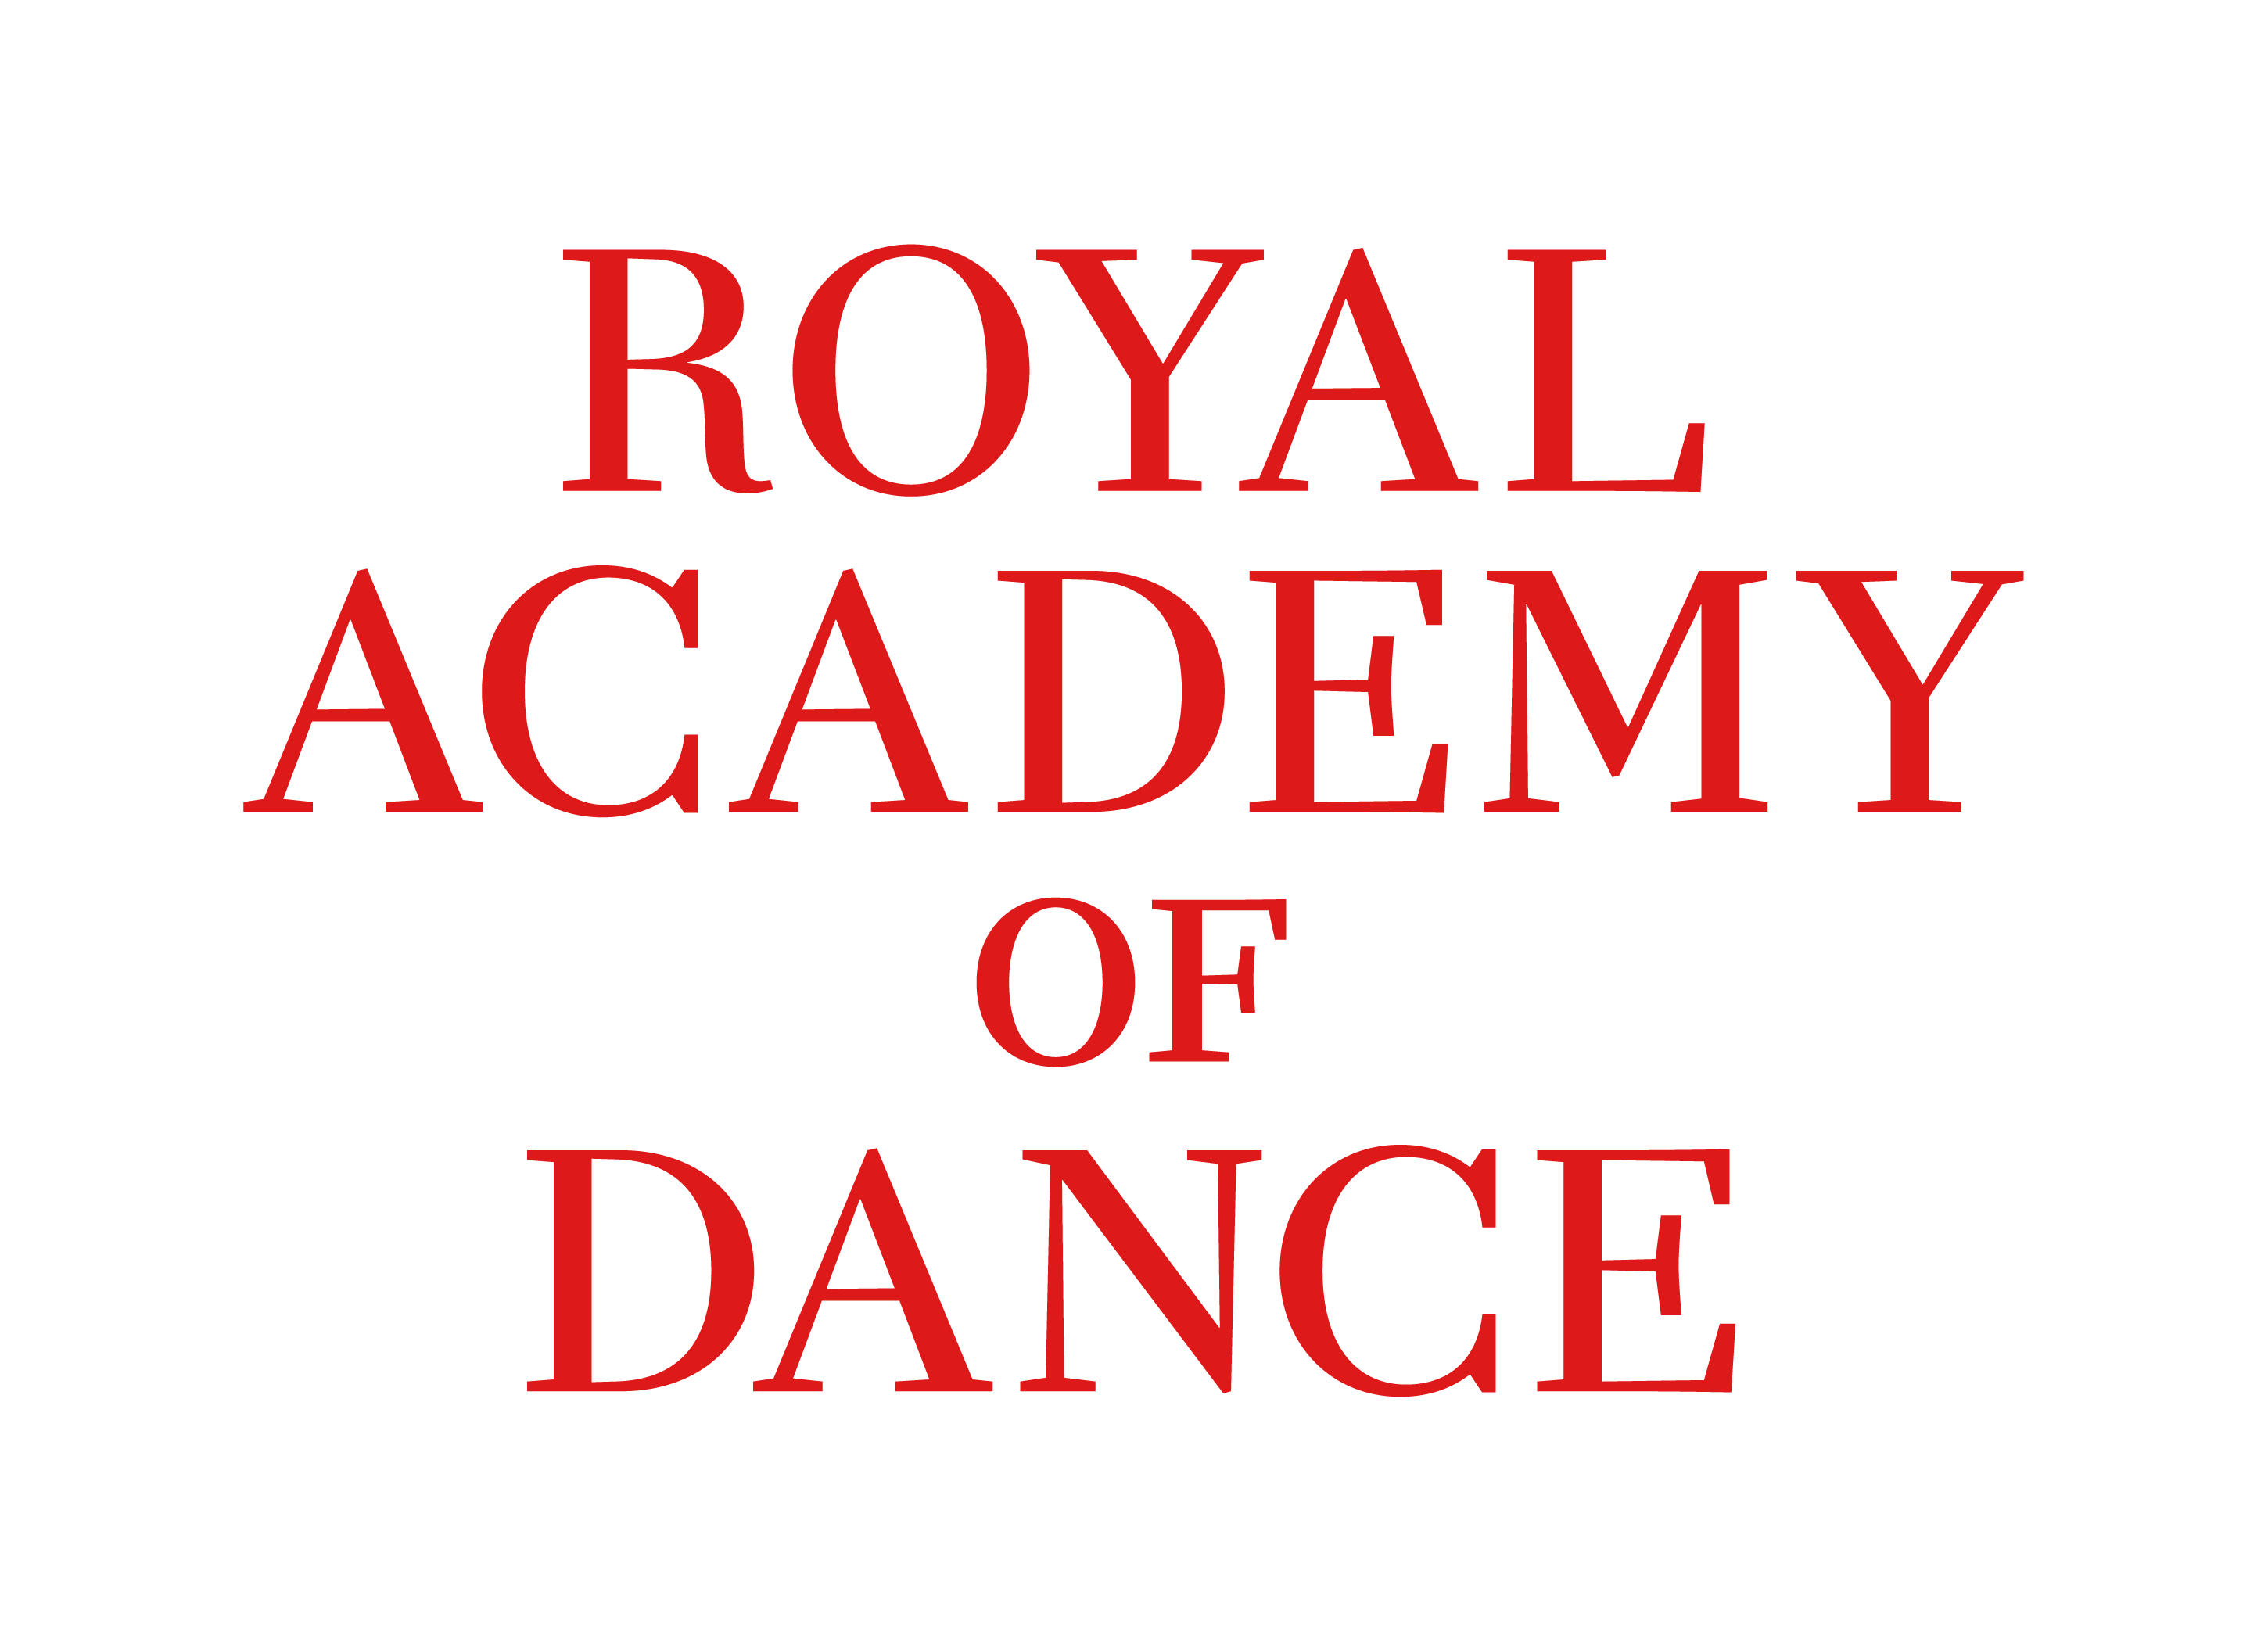 Royal Academy of Dance (Scheme)